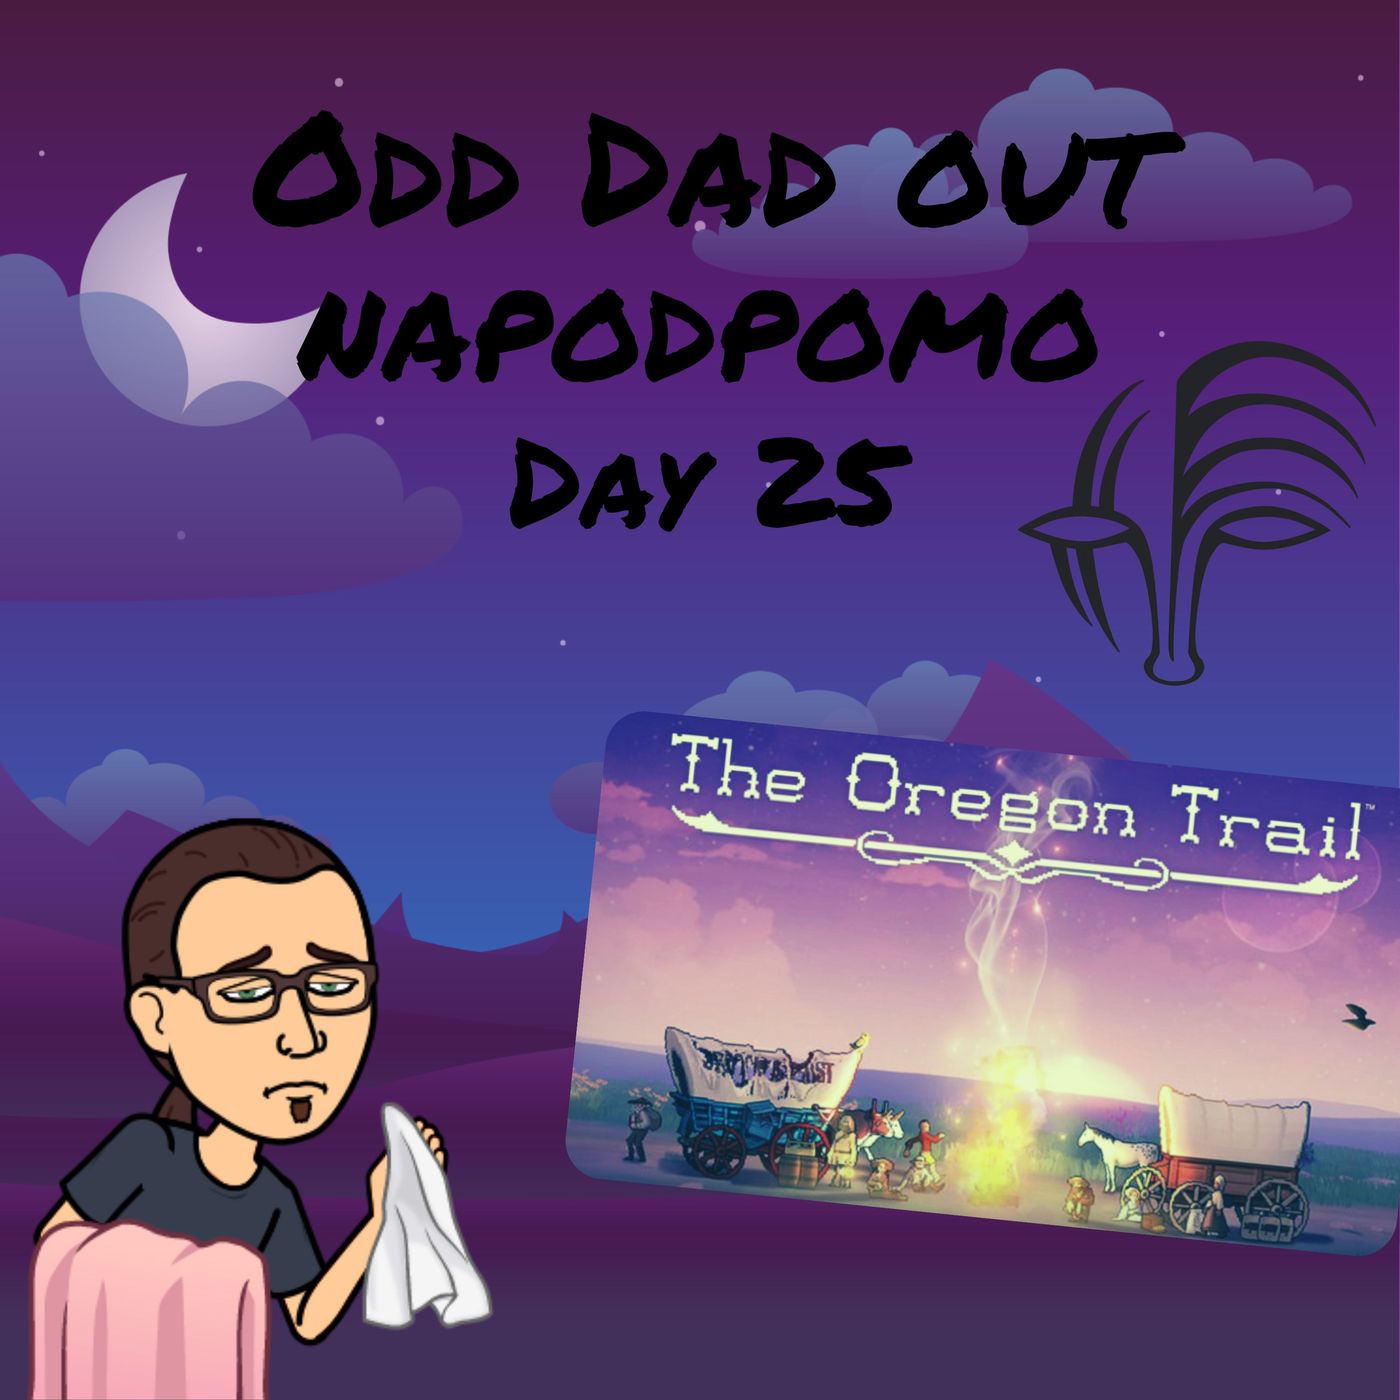 The Oregon Trail: NAPODPOMO Day 25